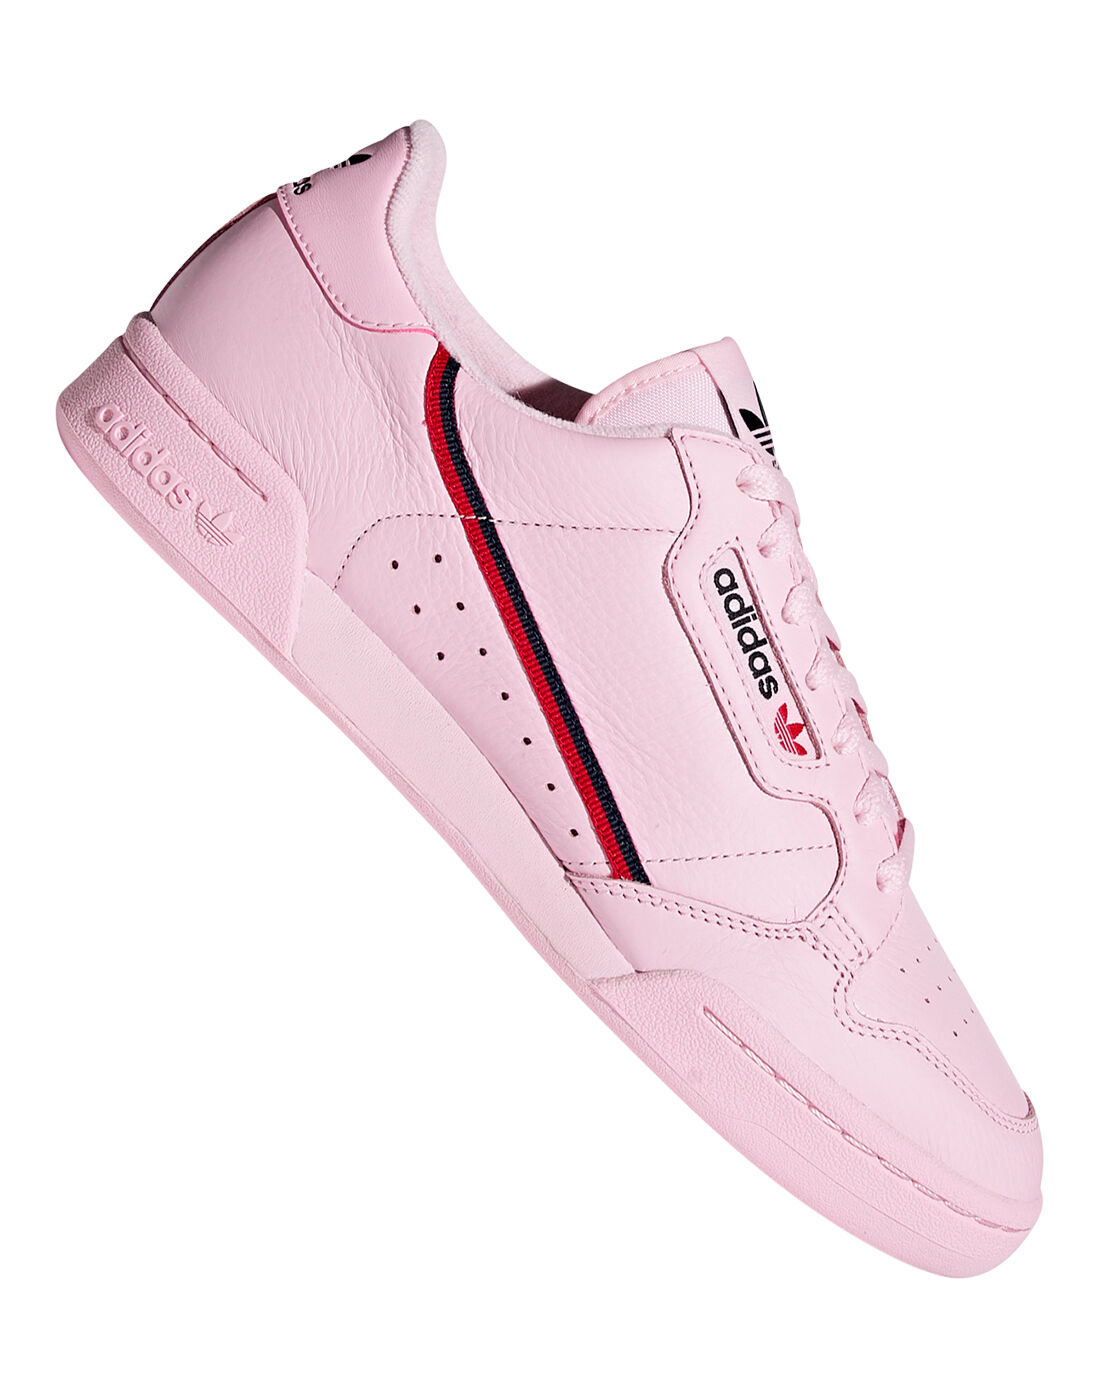 adidas light pink trainers